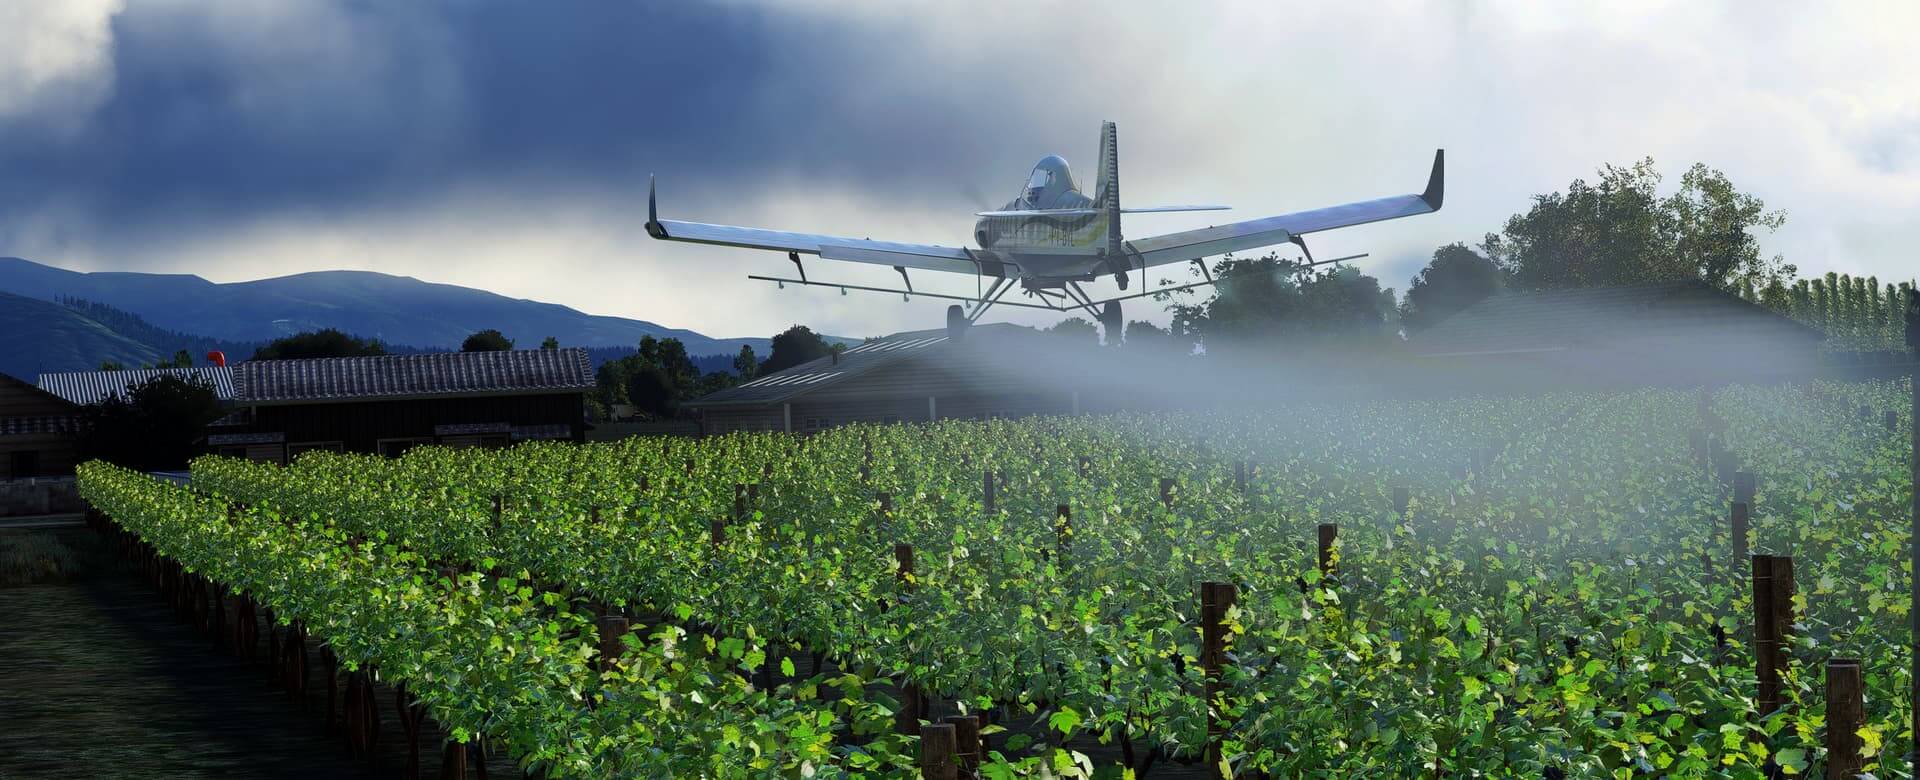 A crop duster flies low over a field spraying fertiliser on crops below.